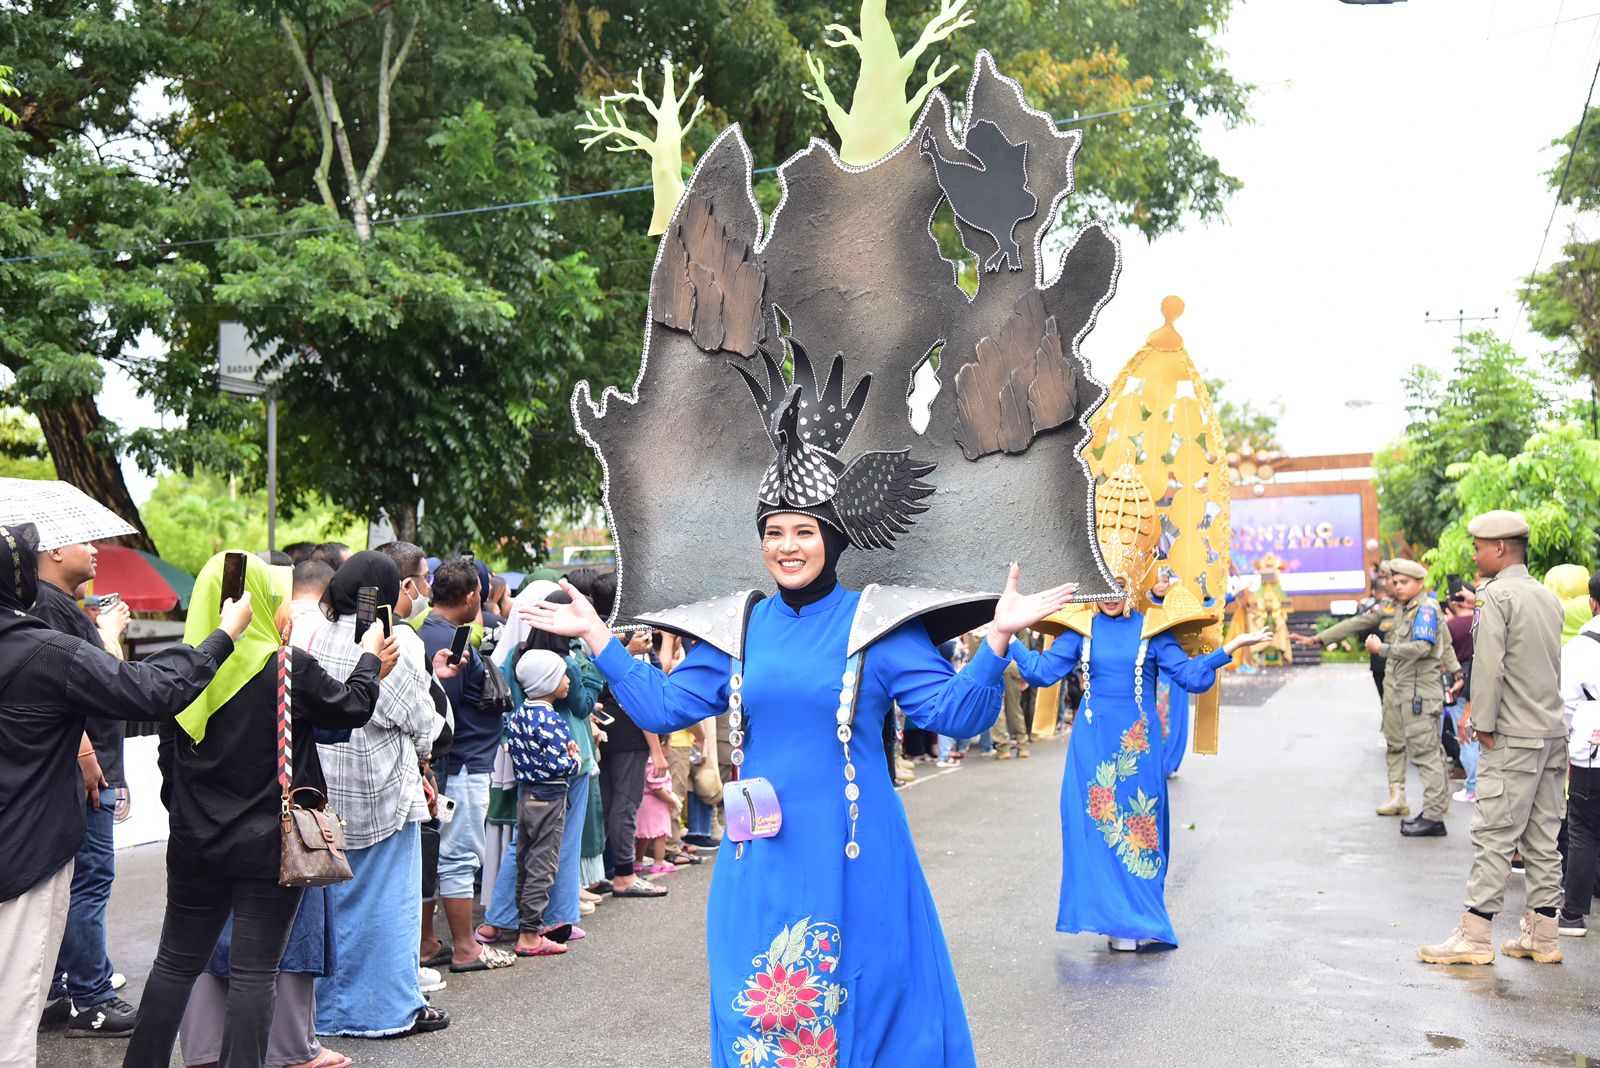  Enjoy Gorontalp Carnival with 50  “mascot” Actions